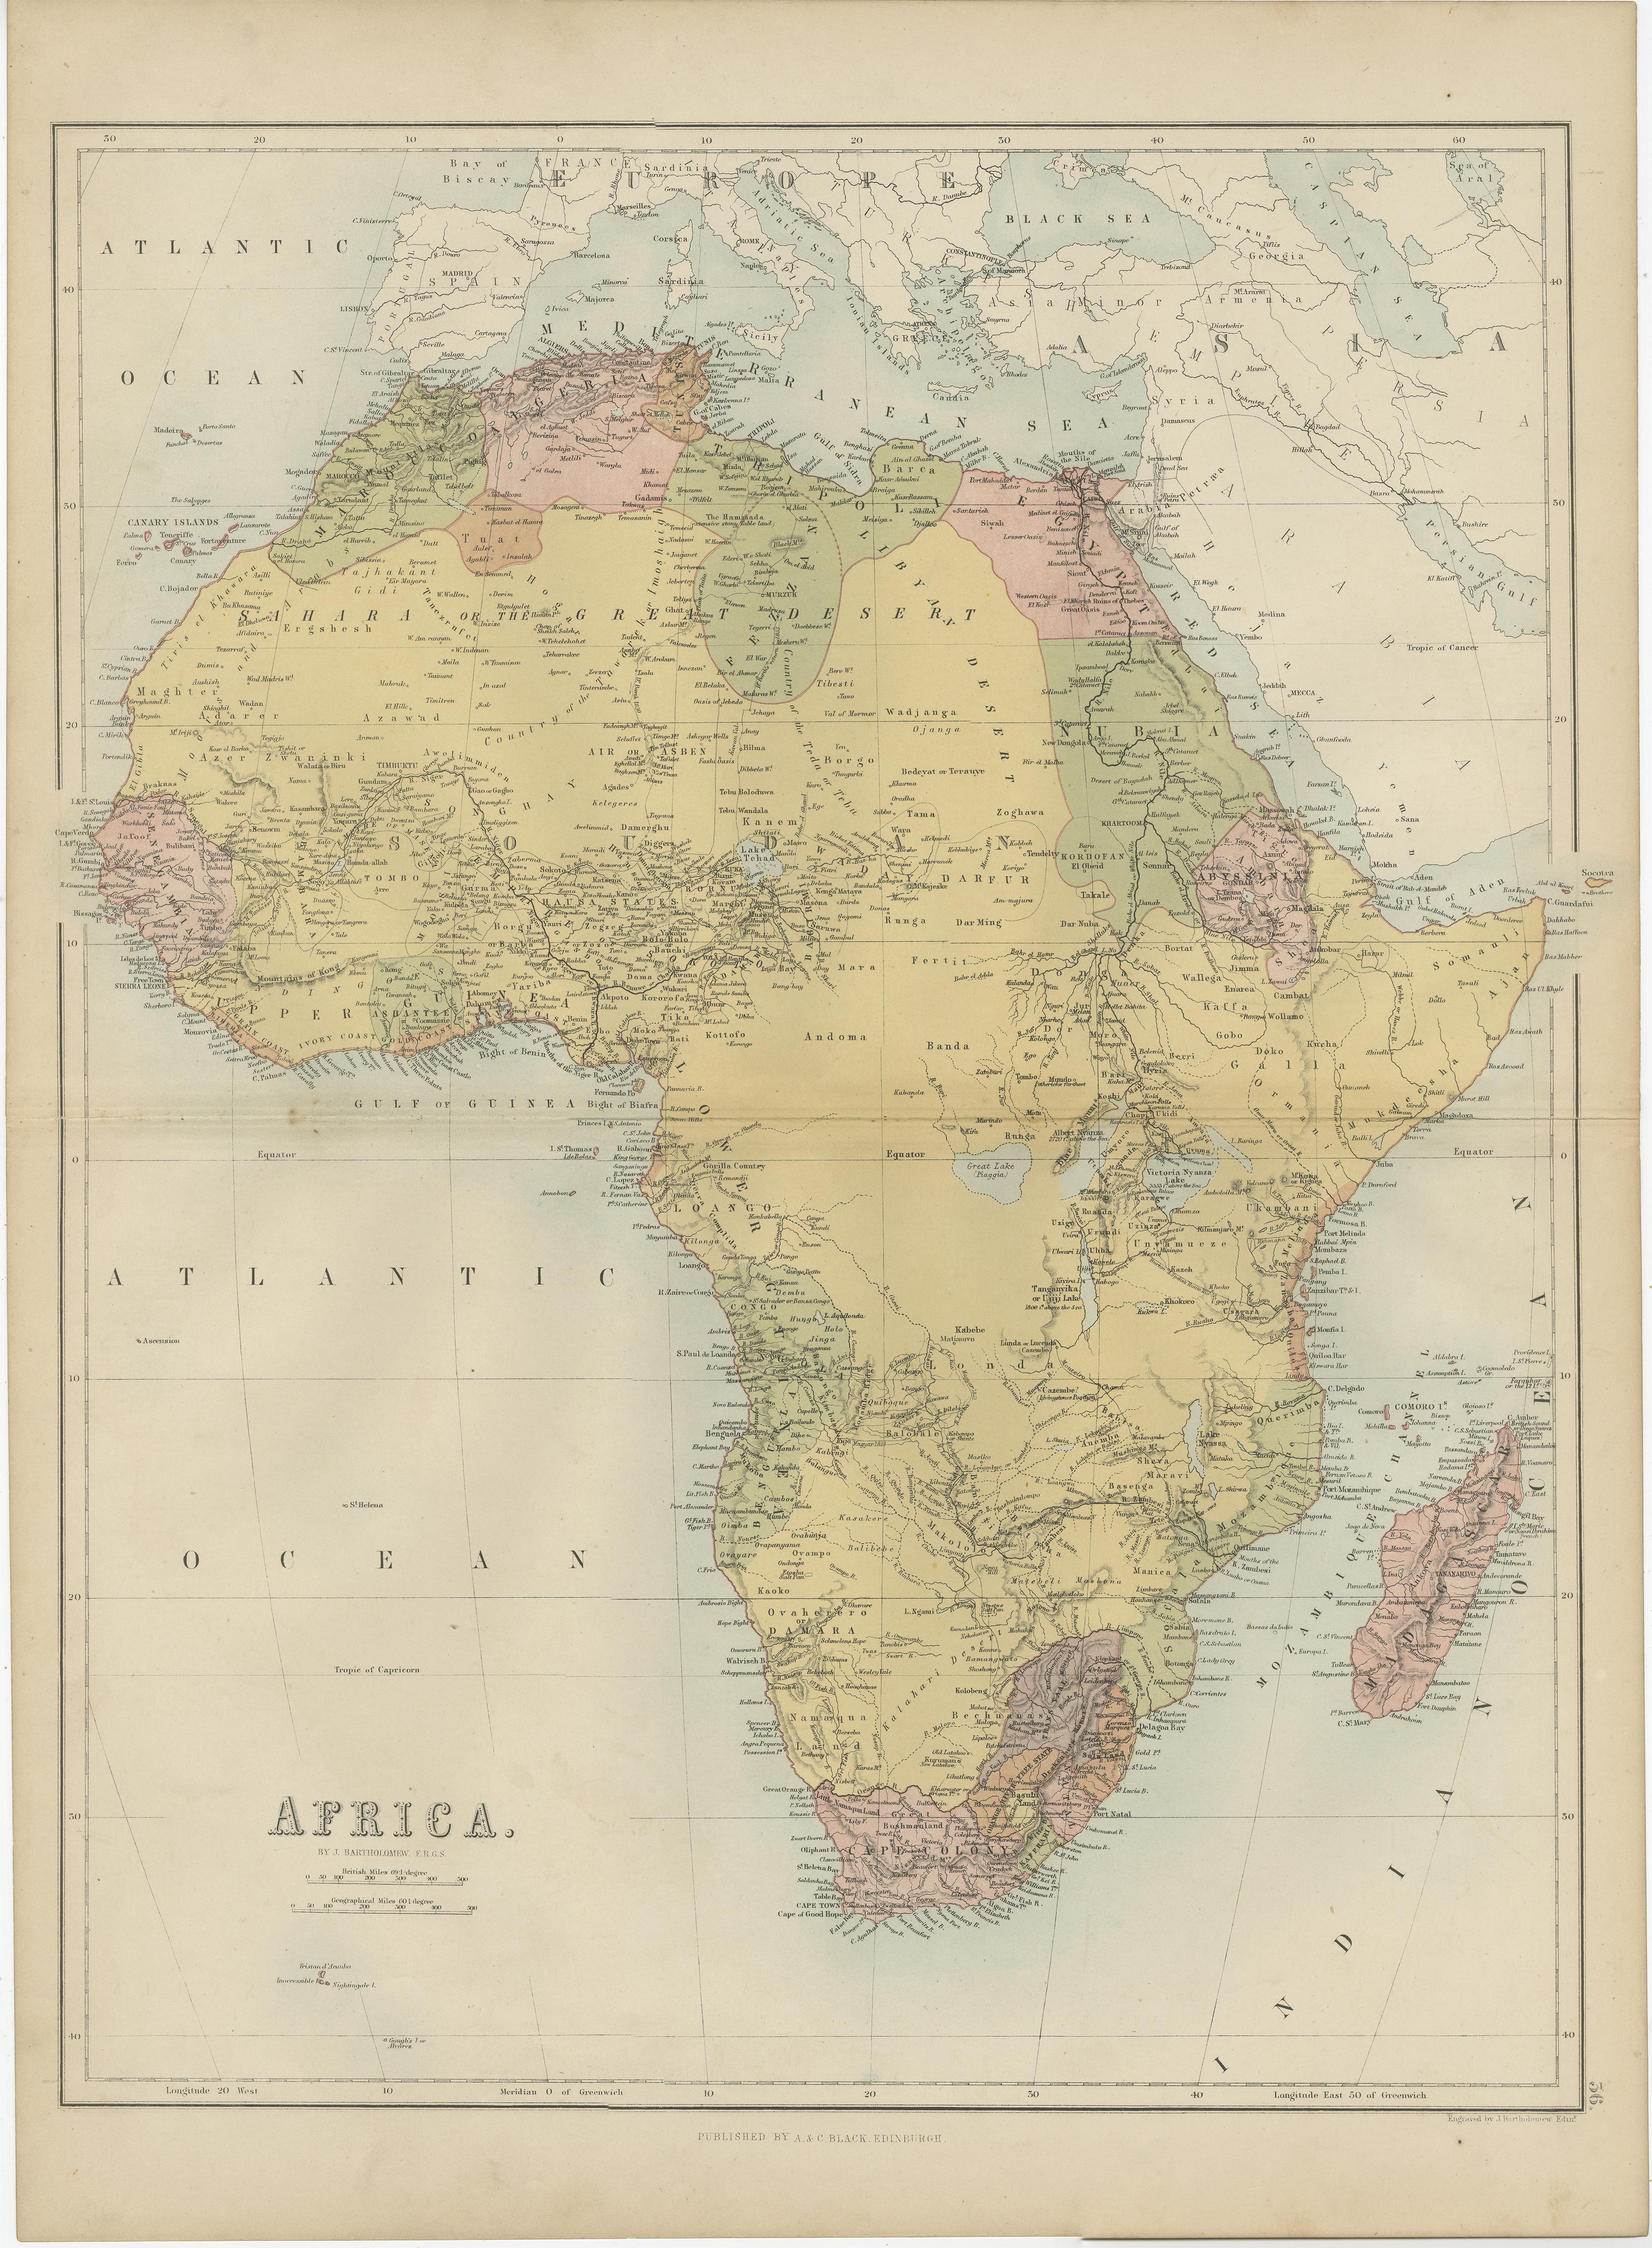 africa in 1870